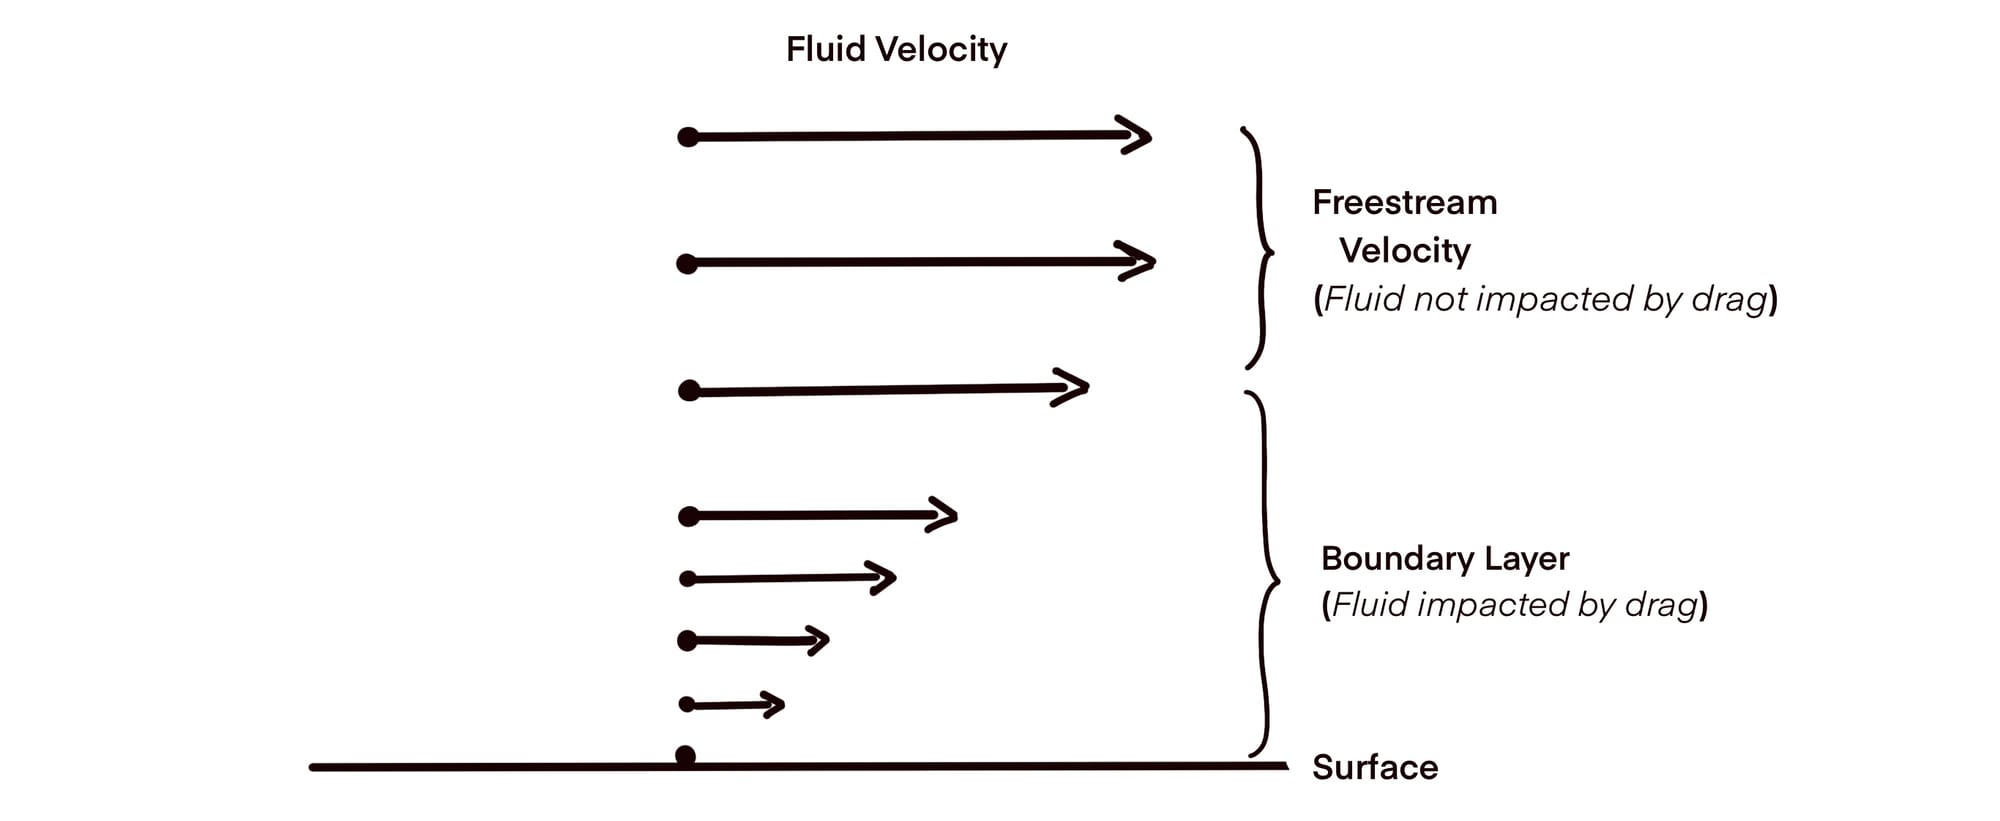 flow diagram